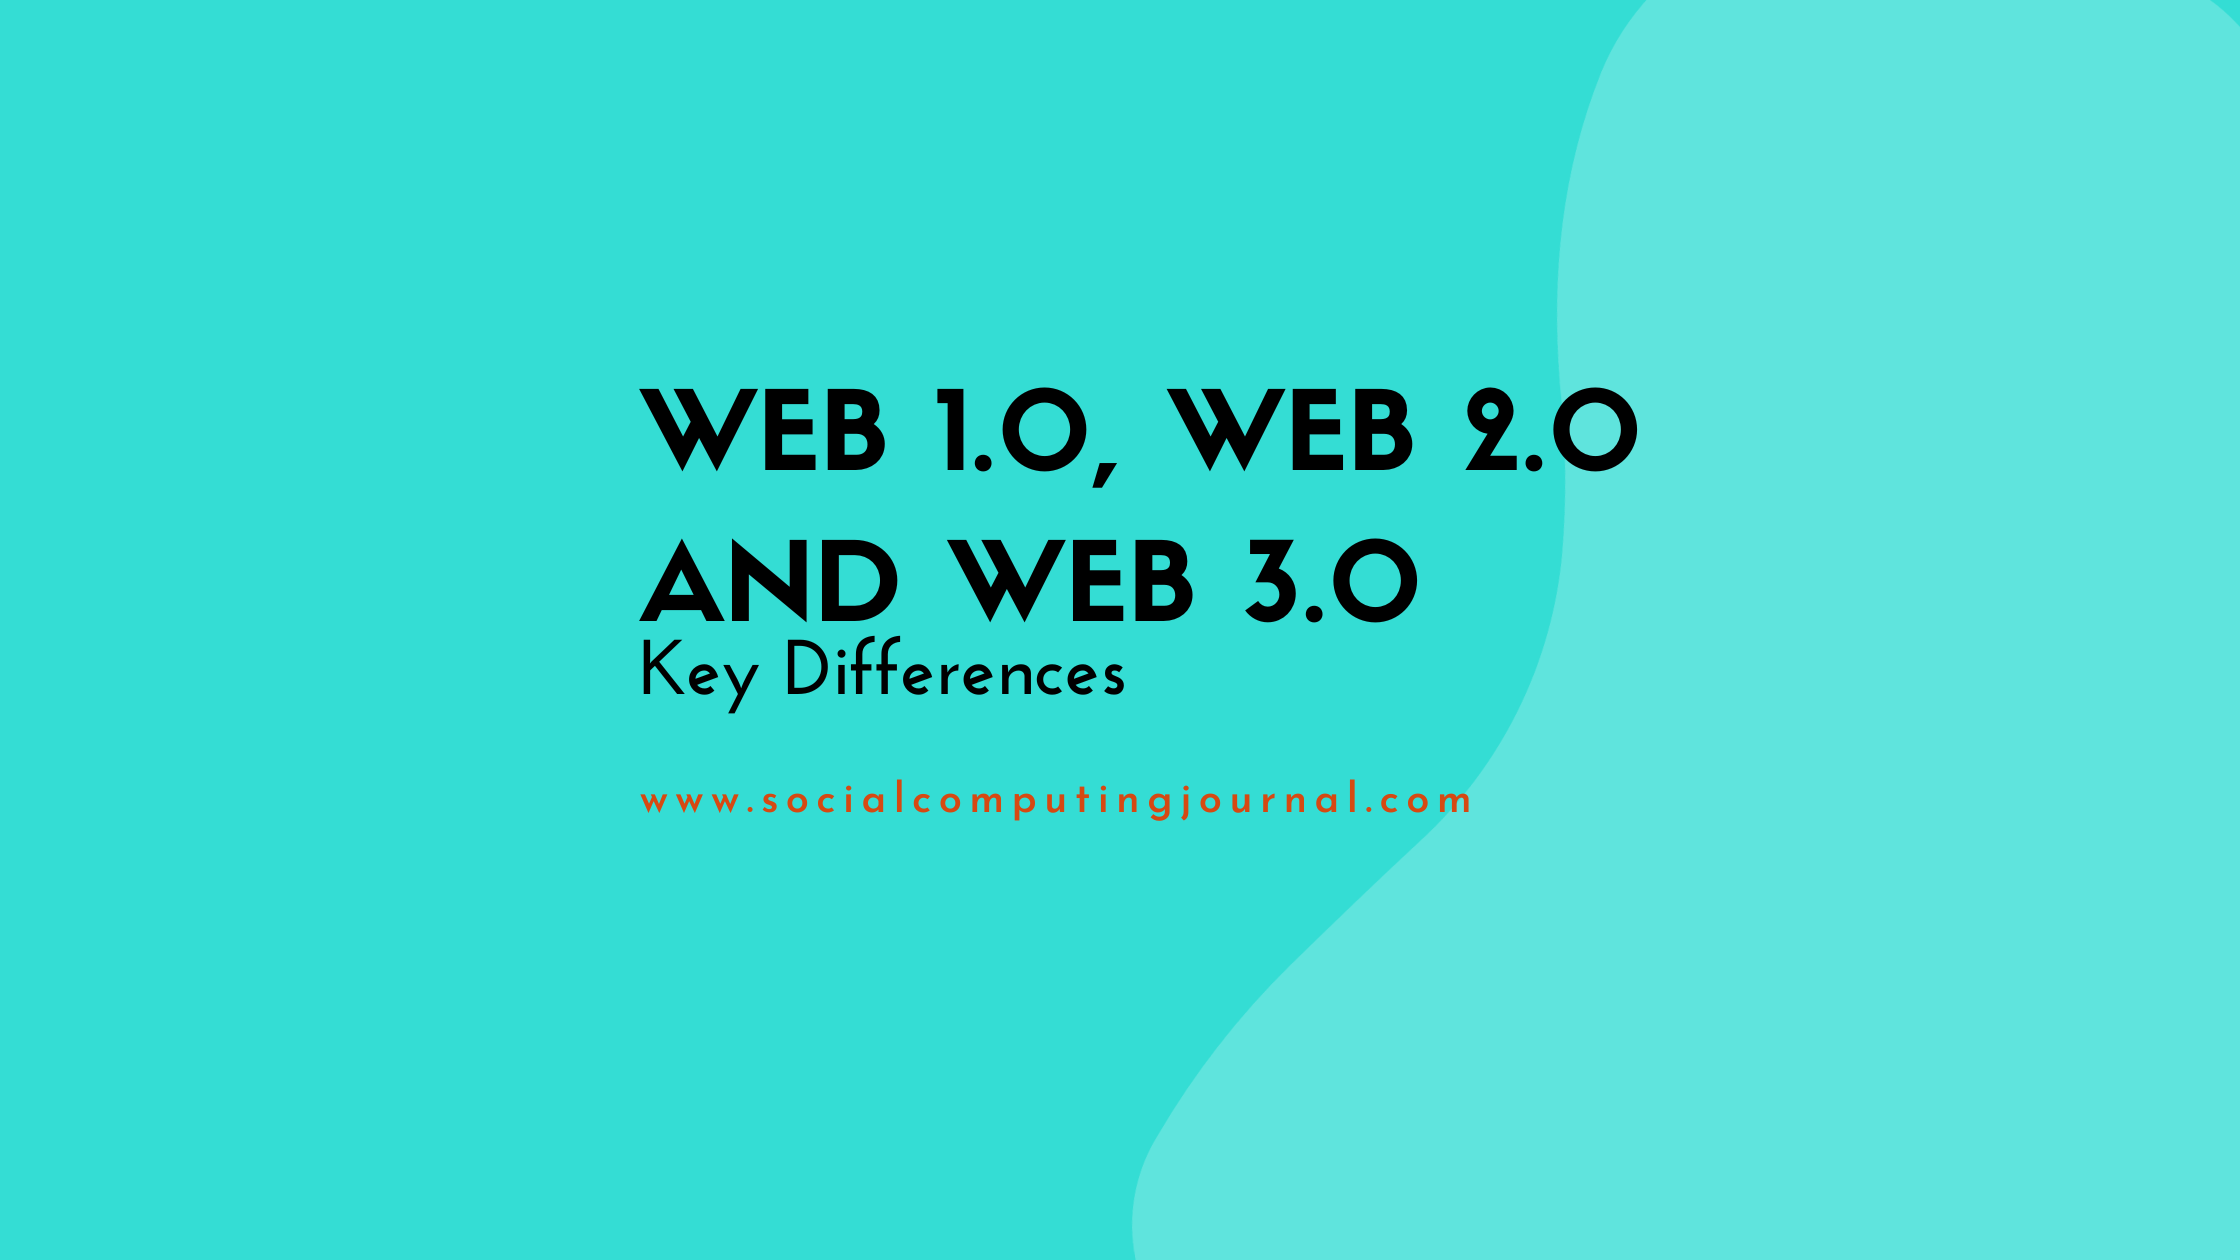 Web 1.0, Web 2.0 and Web 3.0